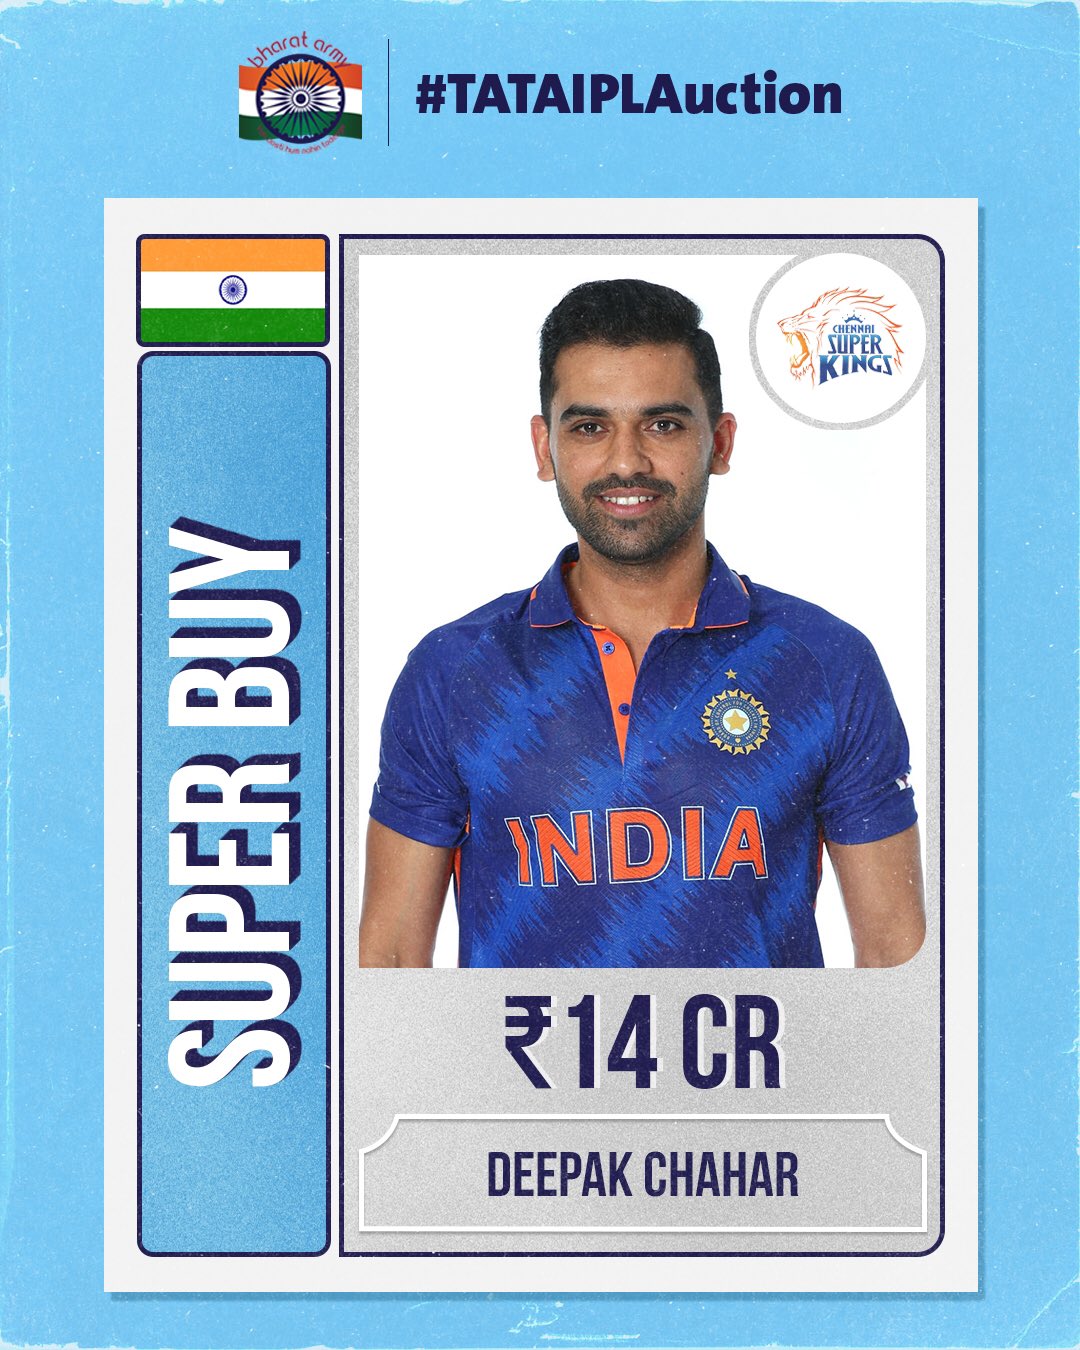 IPL Auction: Deepak Chahar gets ₹14 crores